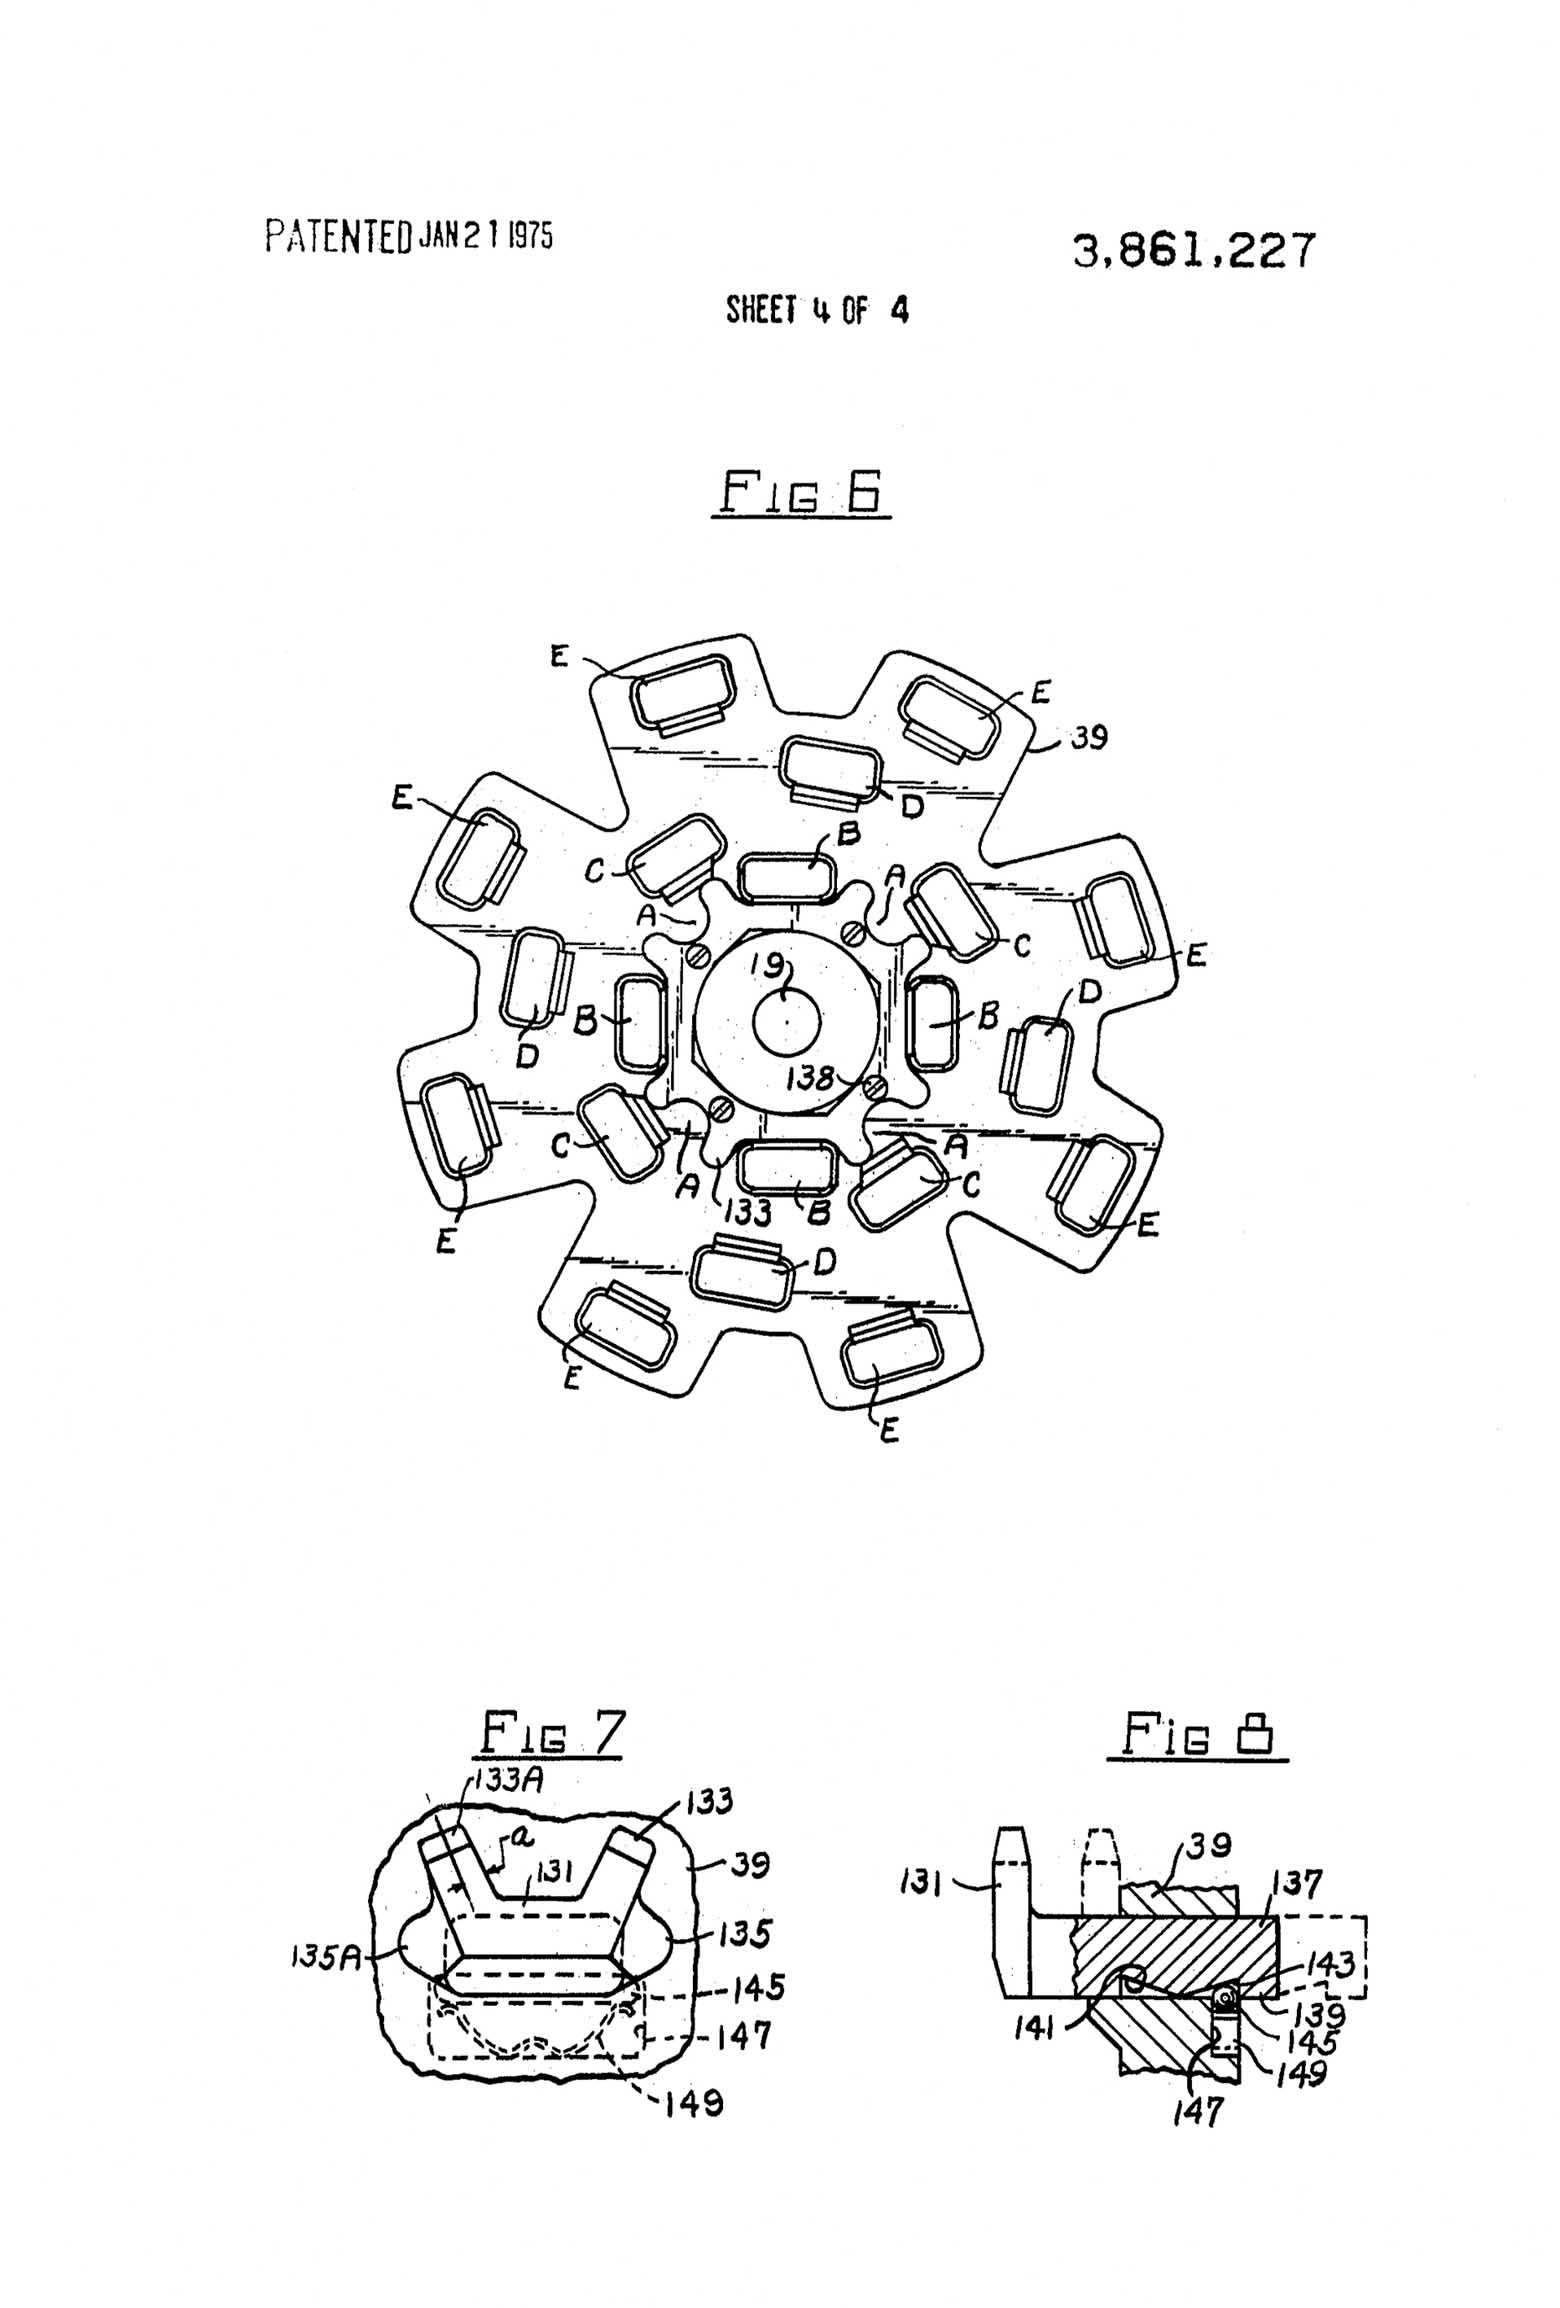 US Patent 3,861,227 - Tokheim scan 11 main image